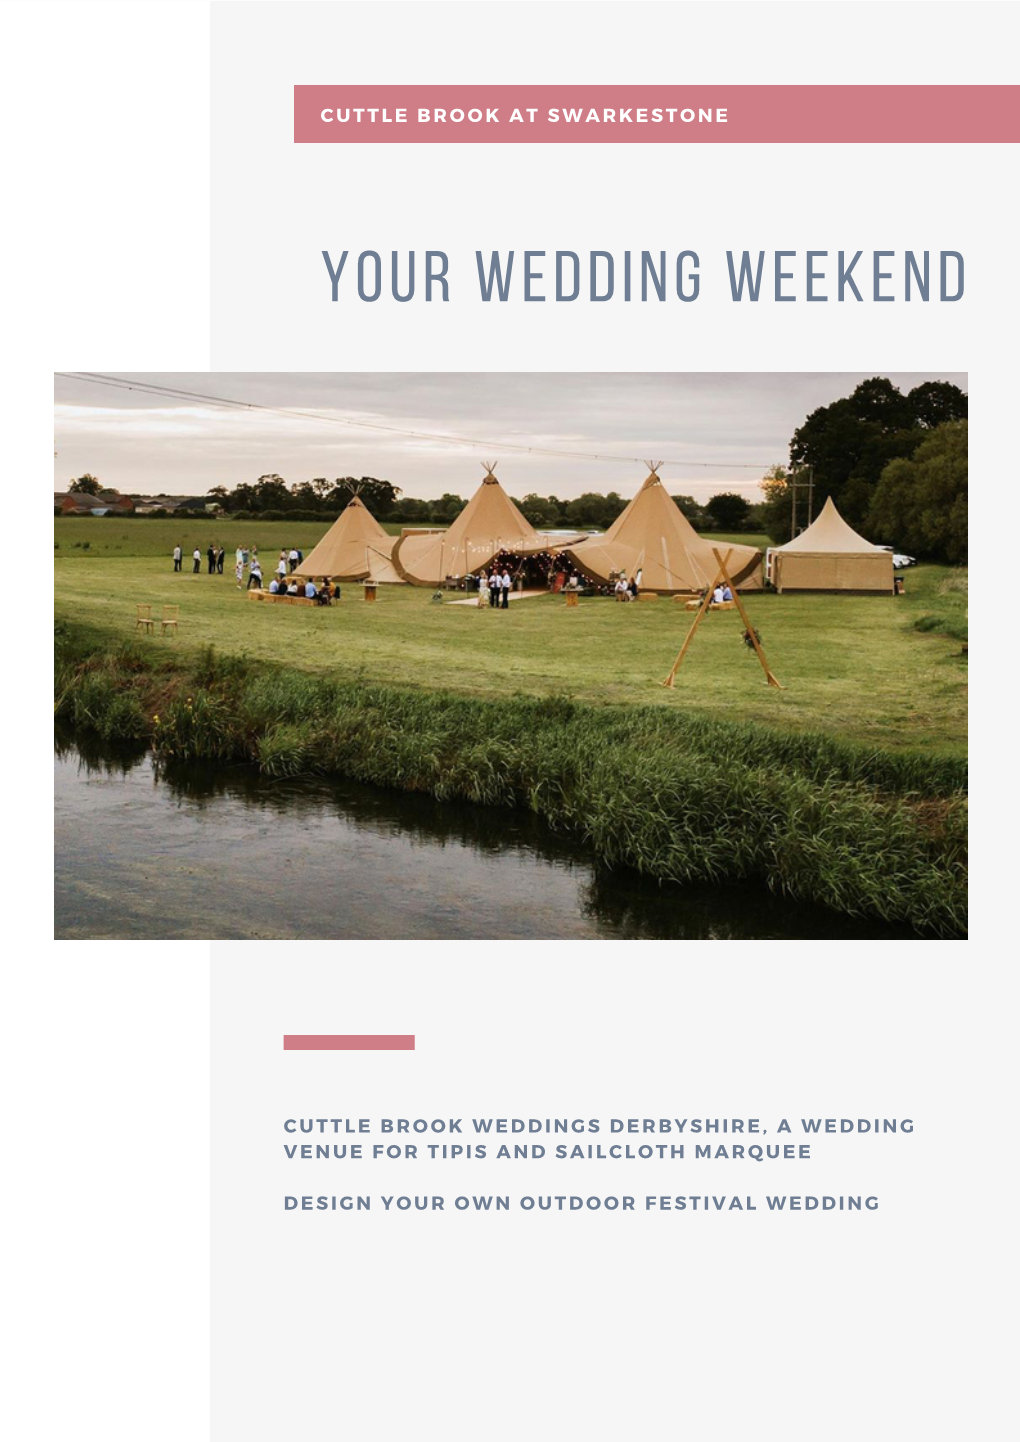 Cuttle Brook at Swarkestone Wedding Information Pack